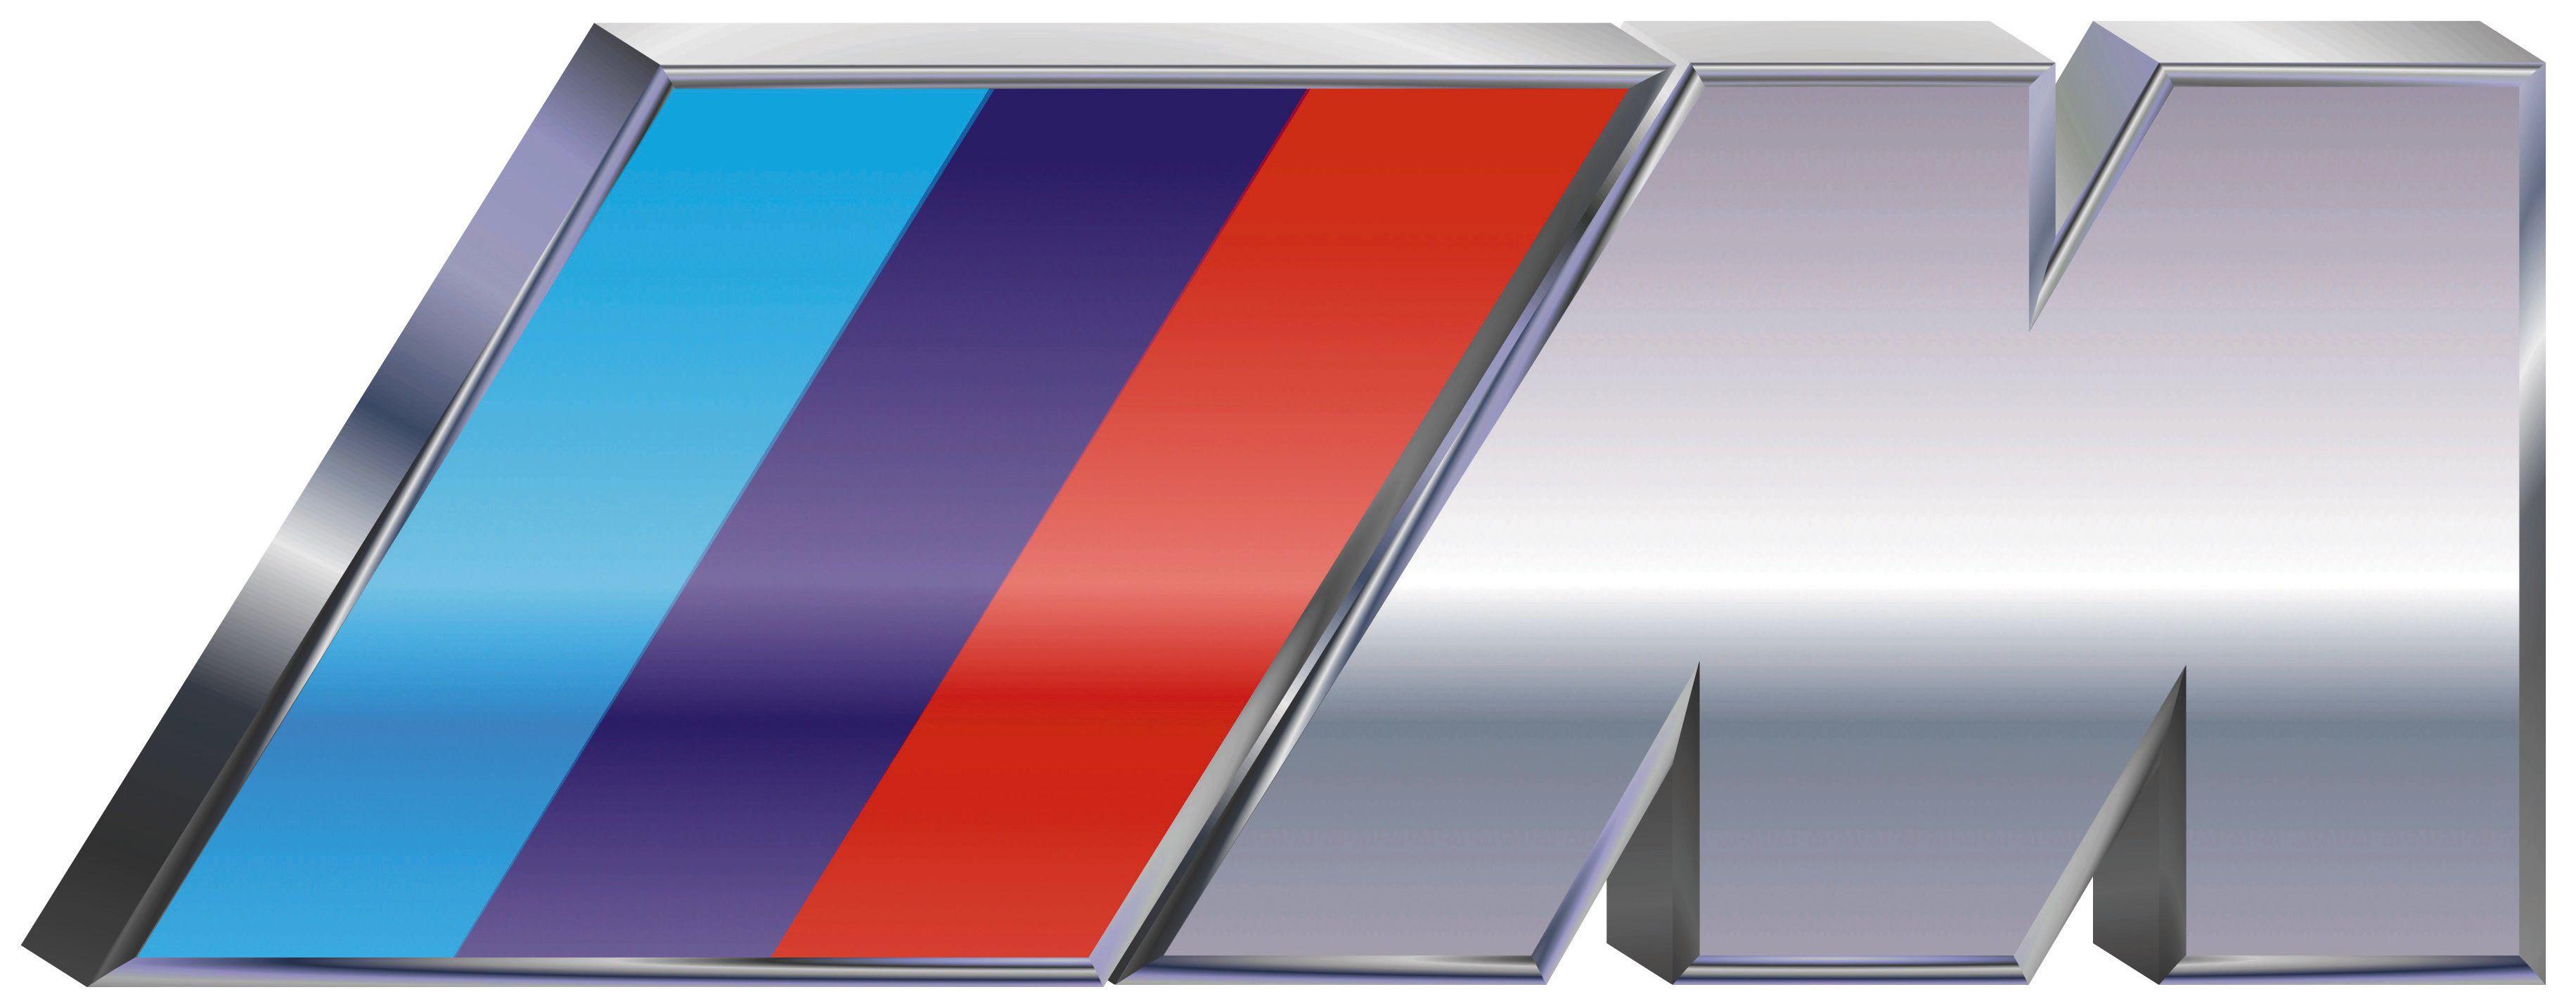 BMW M Series Logo - How to spot a genuine 'M' Series BMW